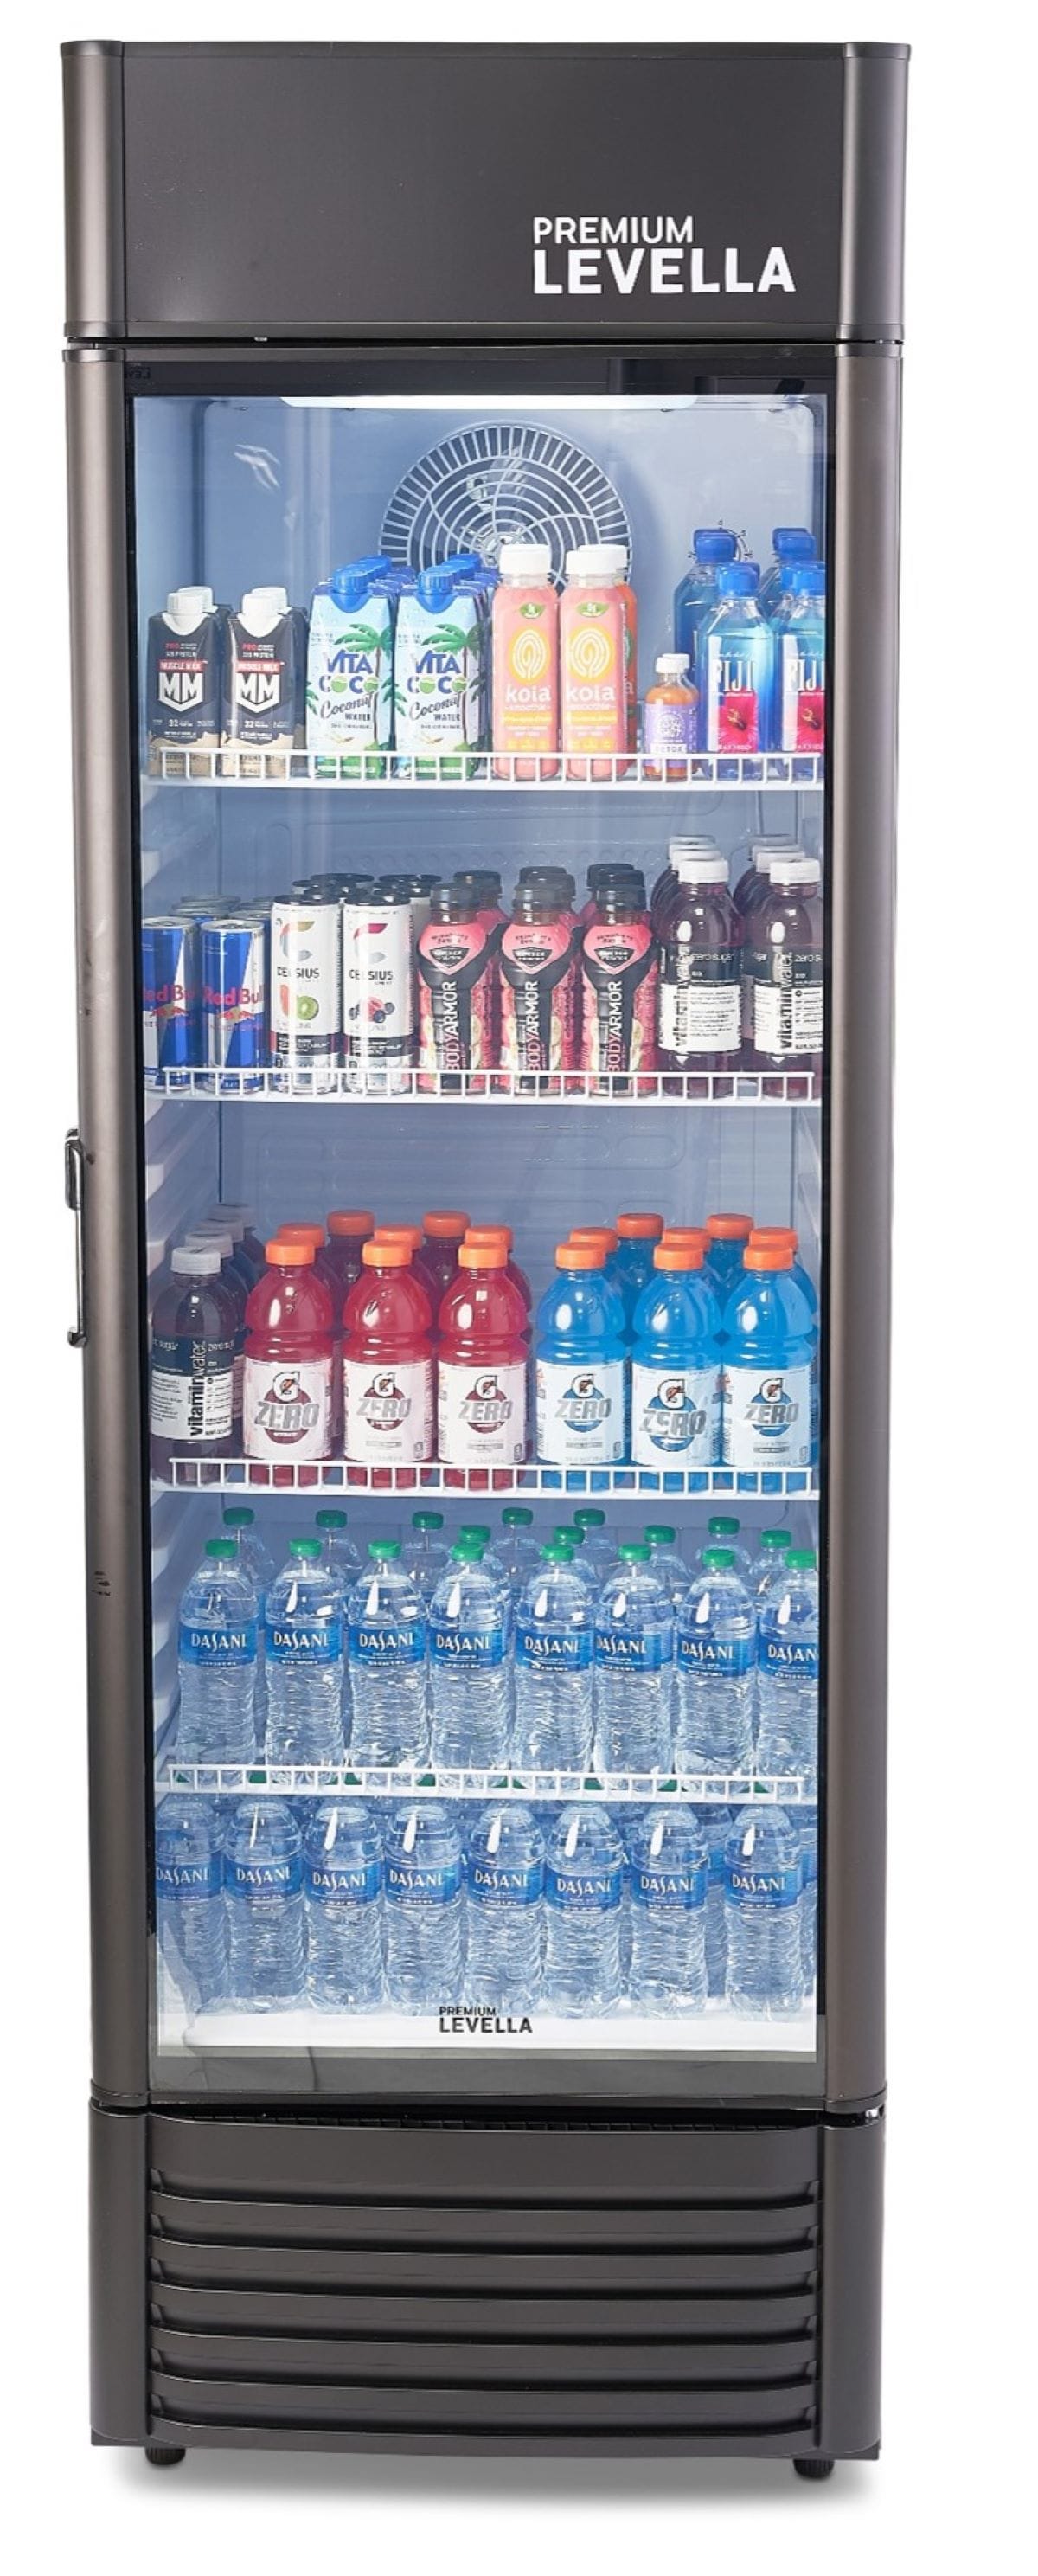 Premium Levella 15.5-cu ft 1-Door Merchandiser Commercial Refrigerator  (Black) in the Commercial Refrigerators department at